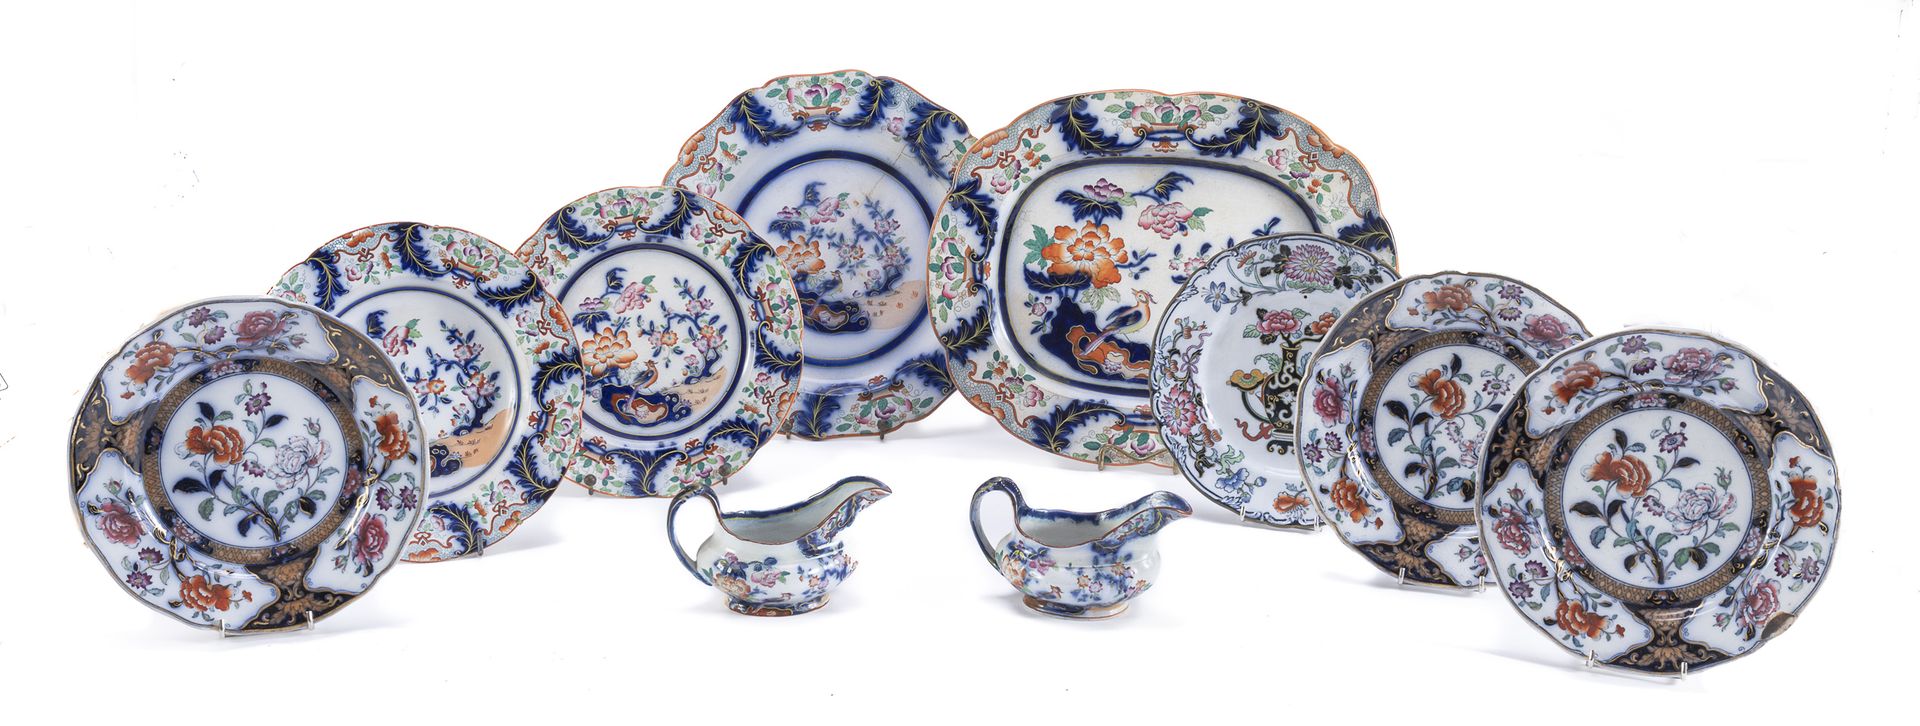 Null 复合陶器晚餐服务，英格兰 19世纪末


带有多色和金色的伊玛瑞式装饰。由7个不同服务的碗，8个平盘，2个服务盘和2个酱缸组成。


餐具的最大尺寸为&hellip;